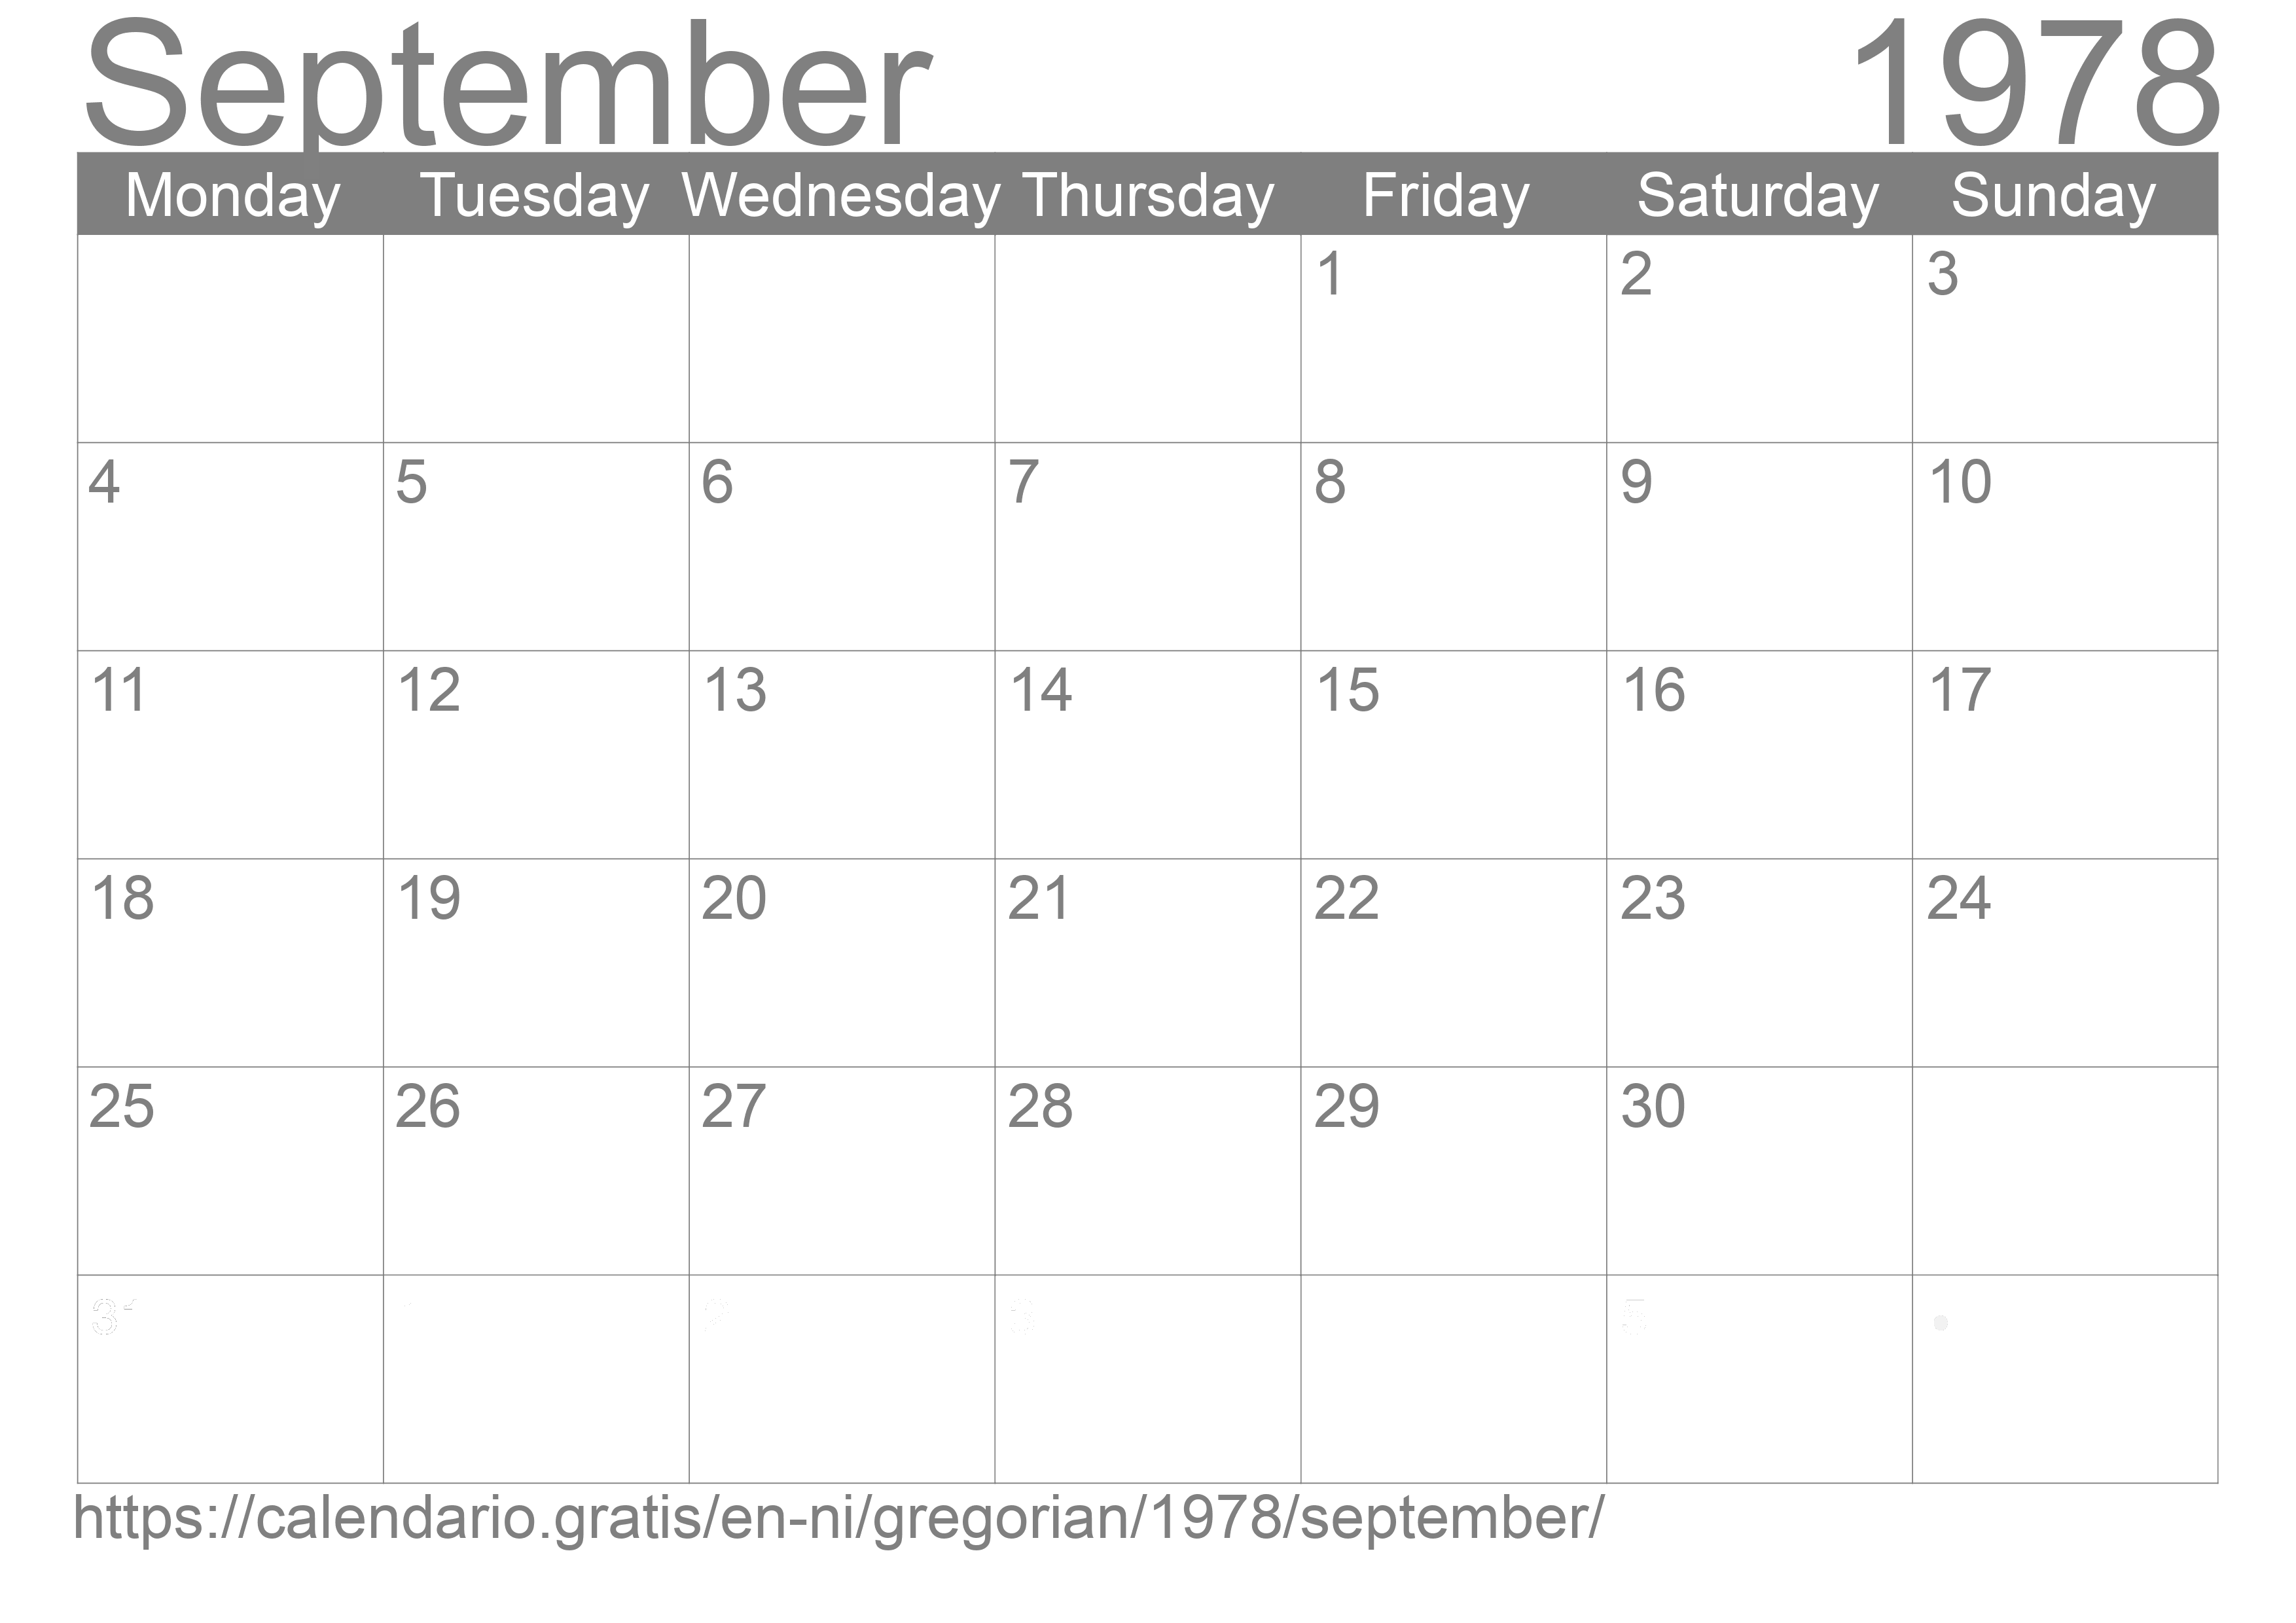 Calendar September 1978 to print